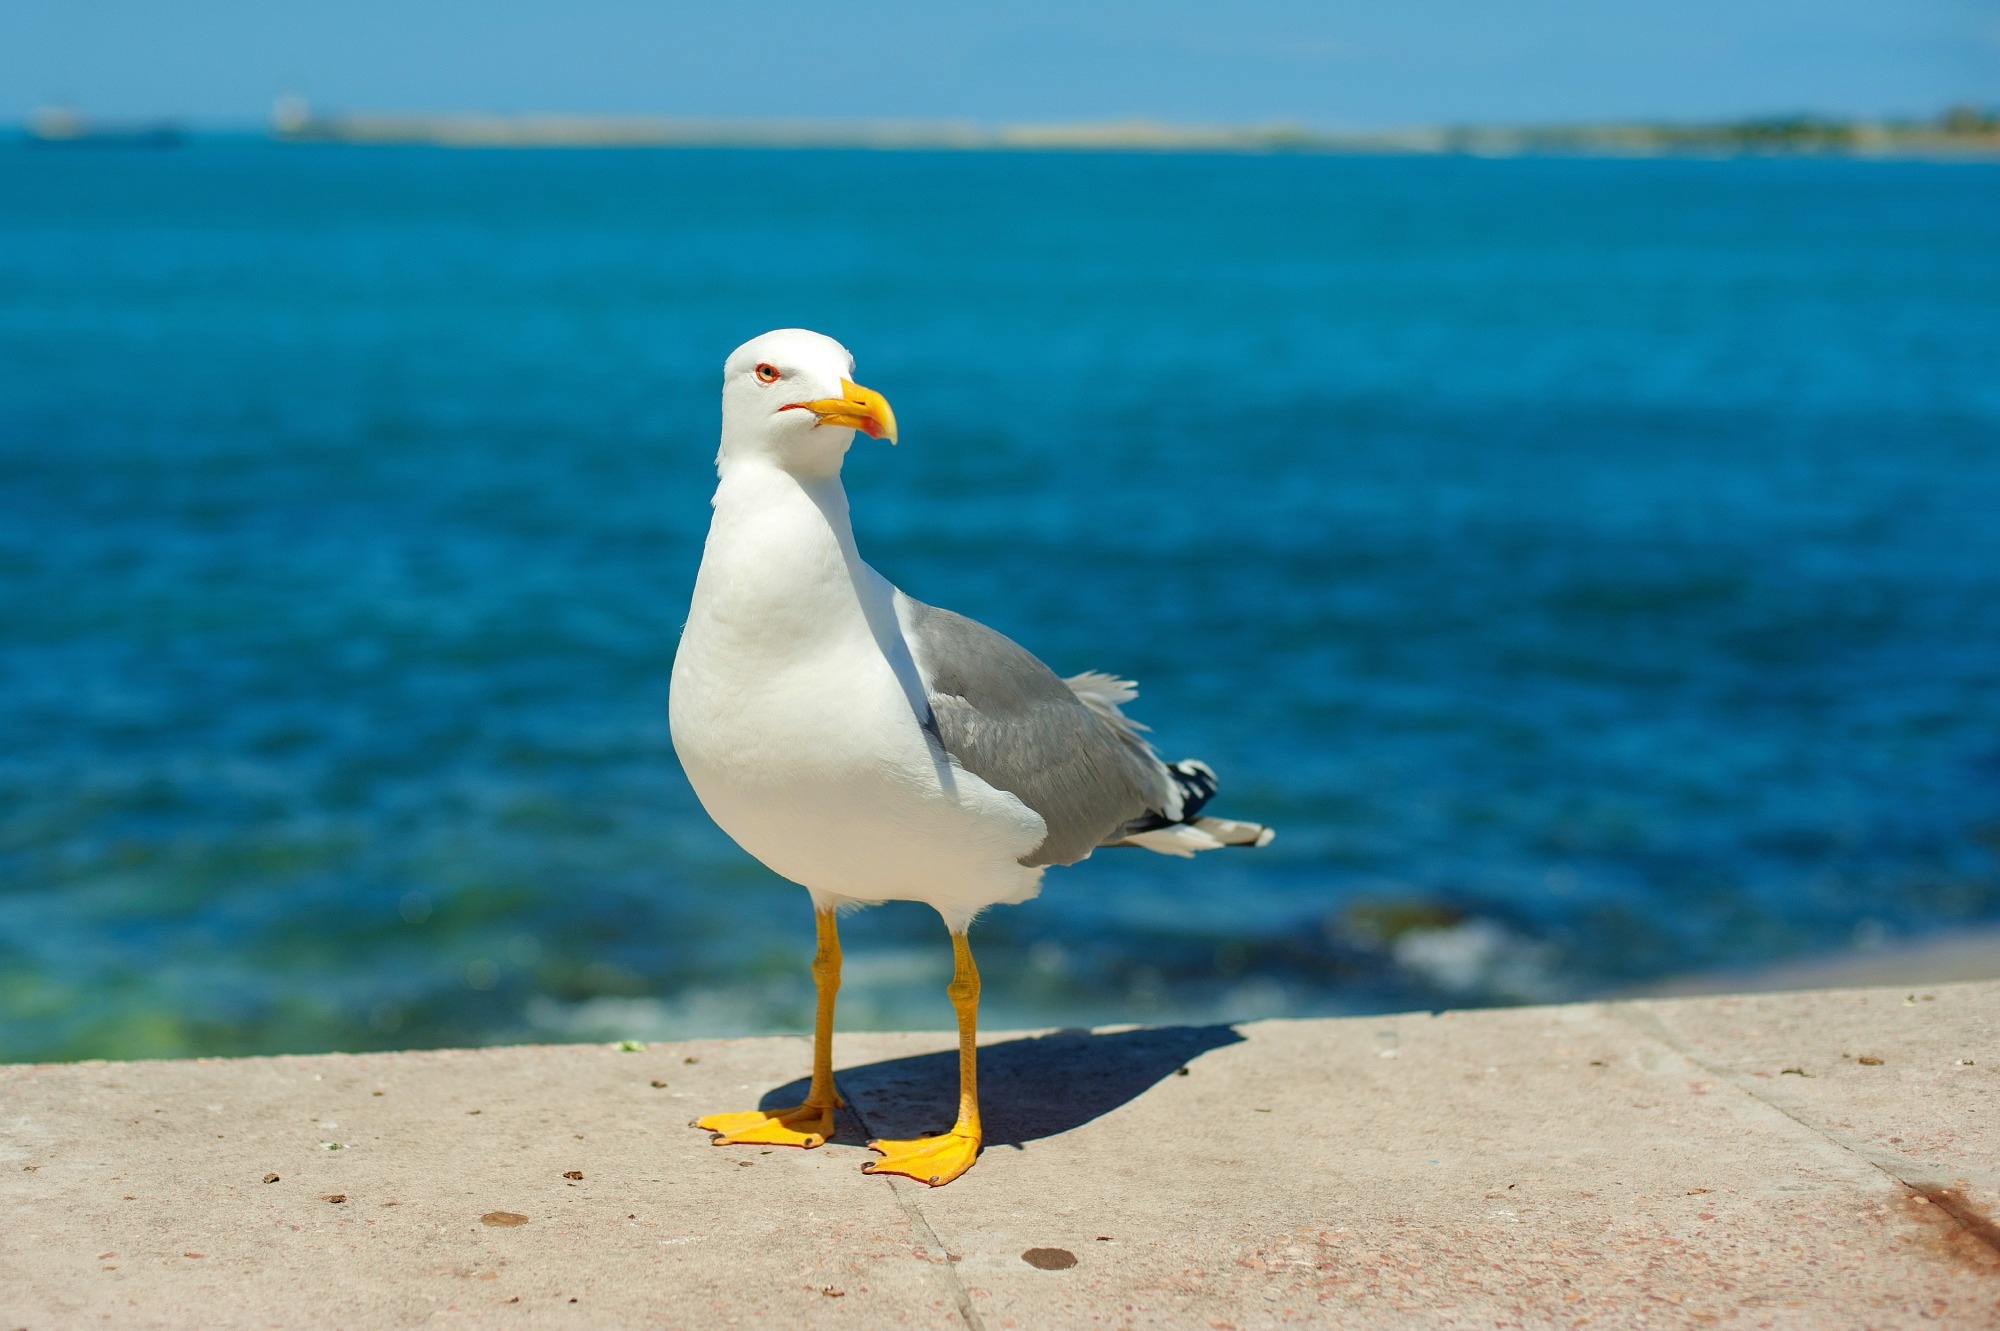 Study: Gulls as a host for both gamma and deltacoronaviruses. Image Credit: Nataliya Dorokhina / Shutterstock.com